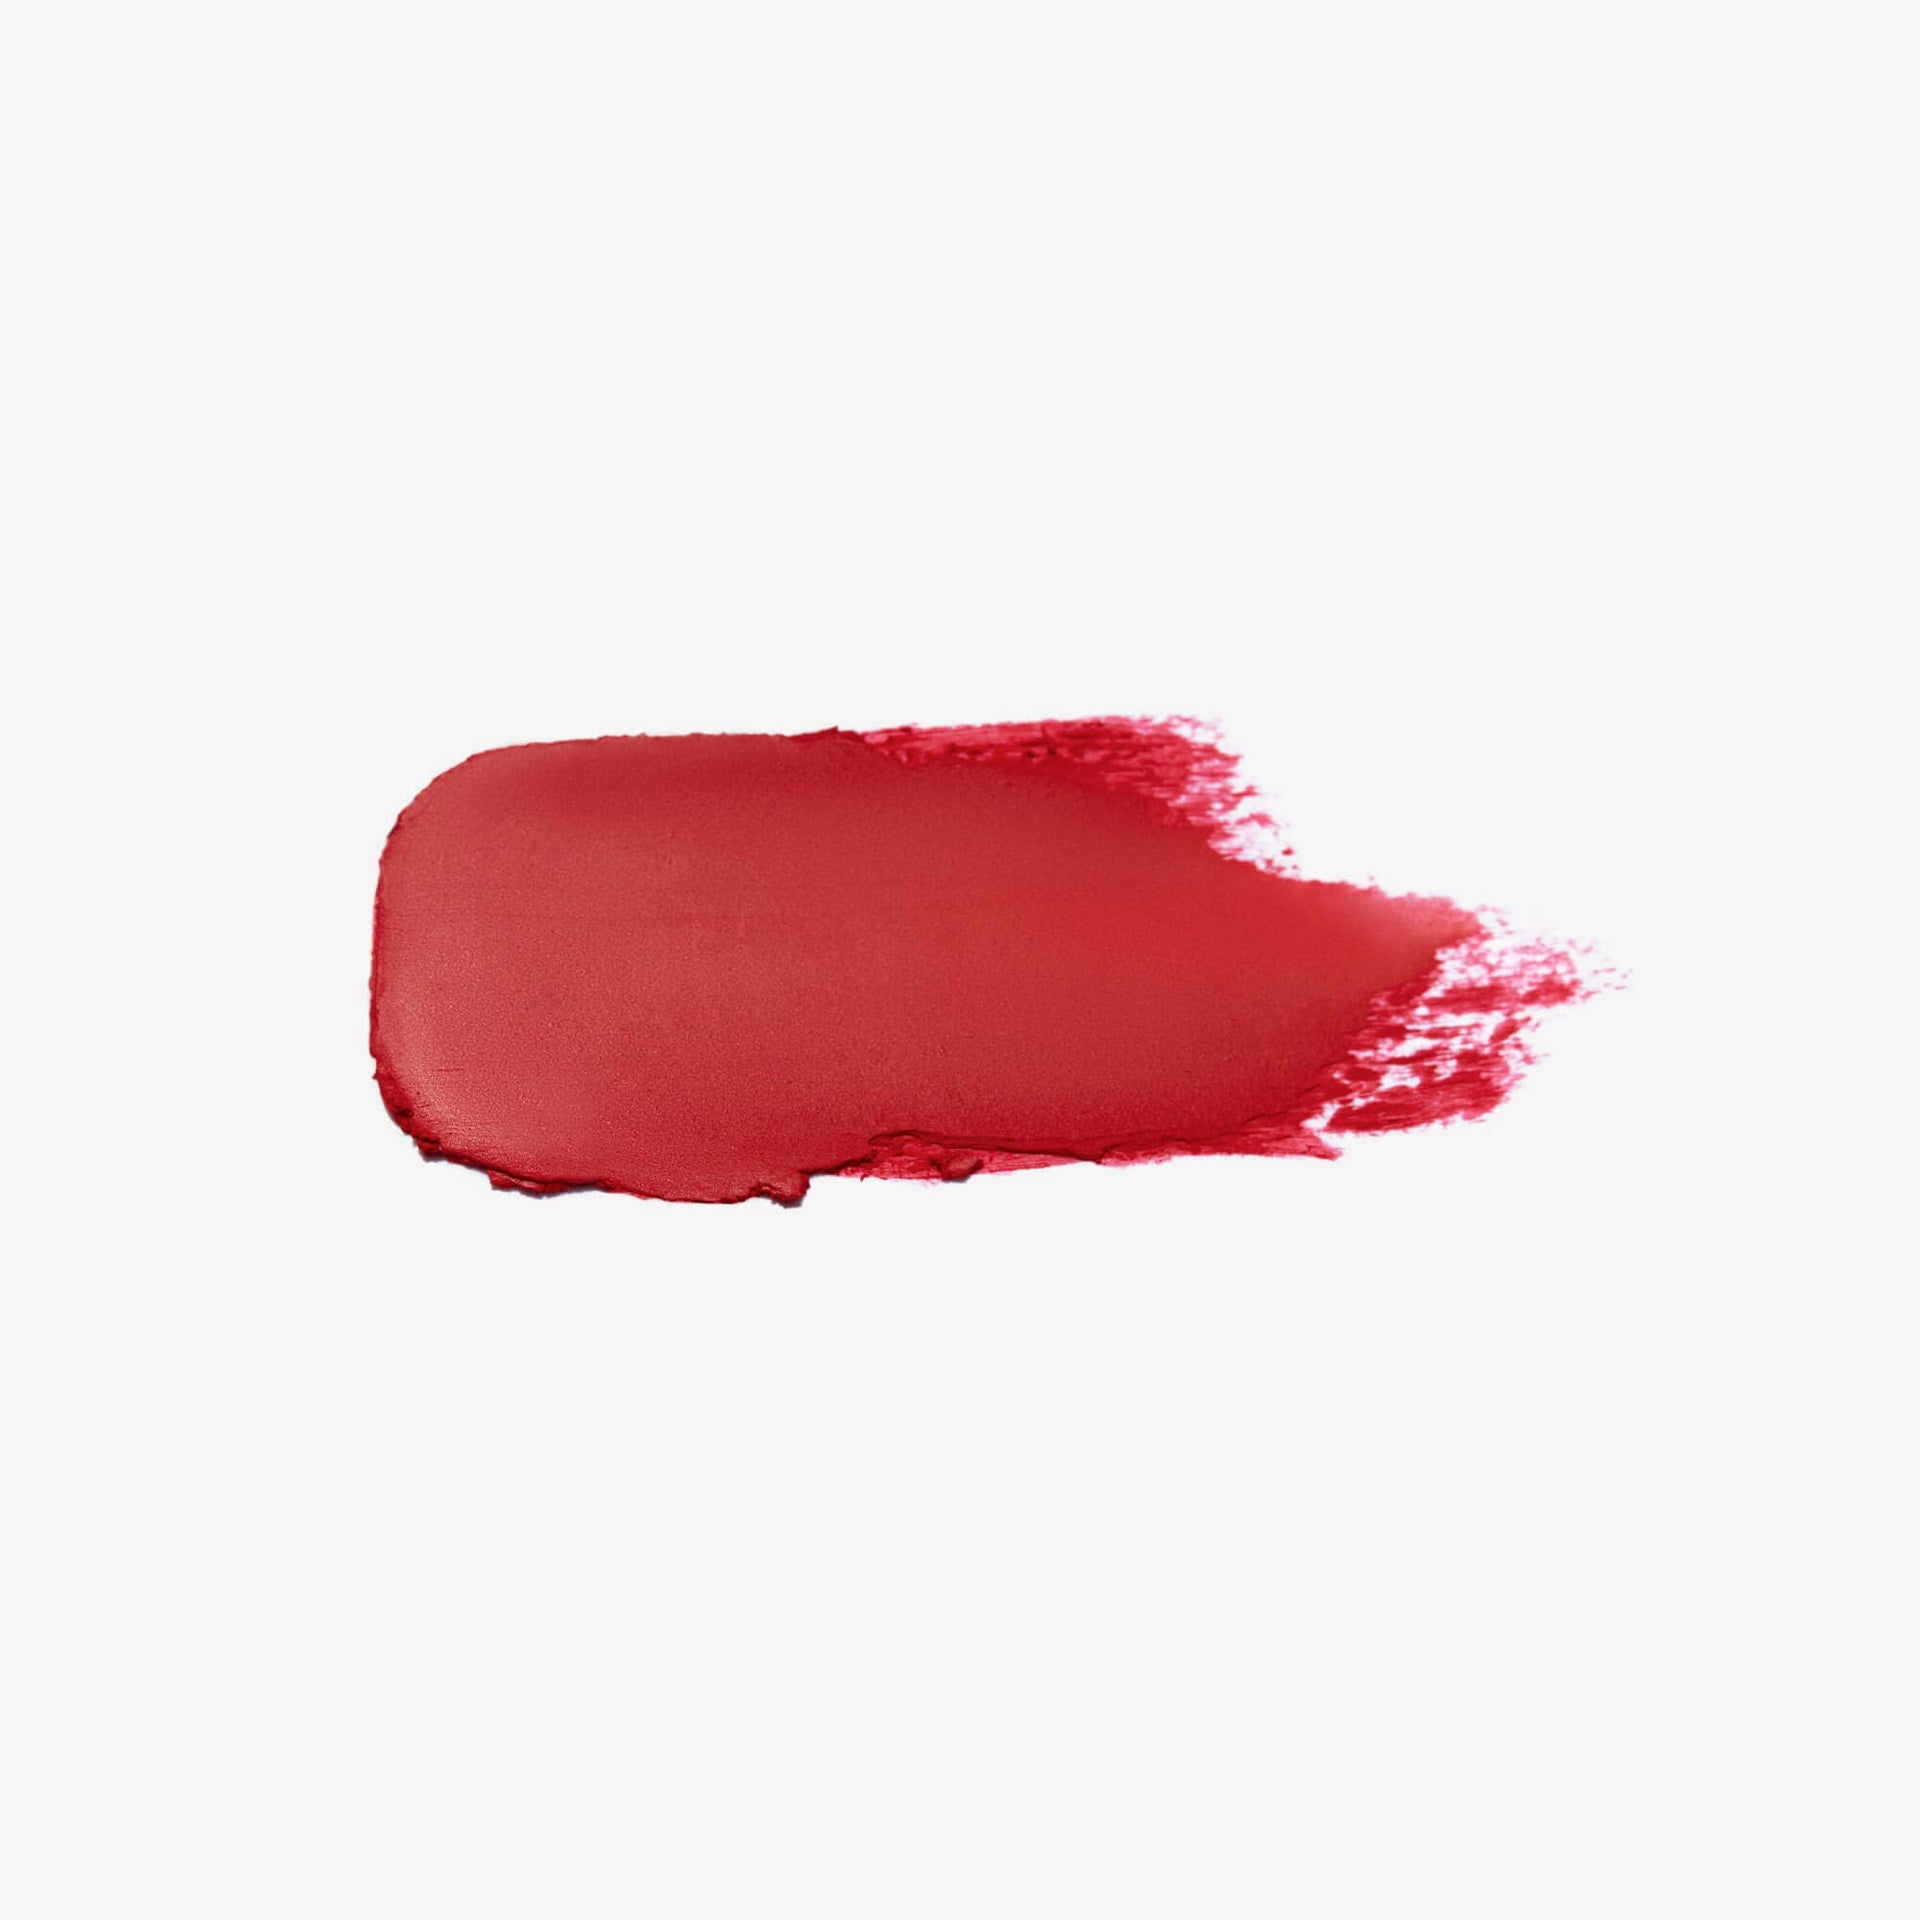 Rosette |Limited Edition Satin Lipstick Swatch Shade Rosette